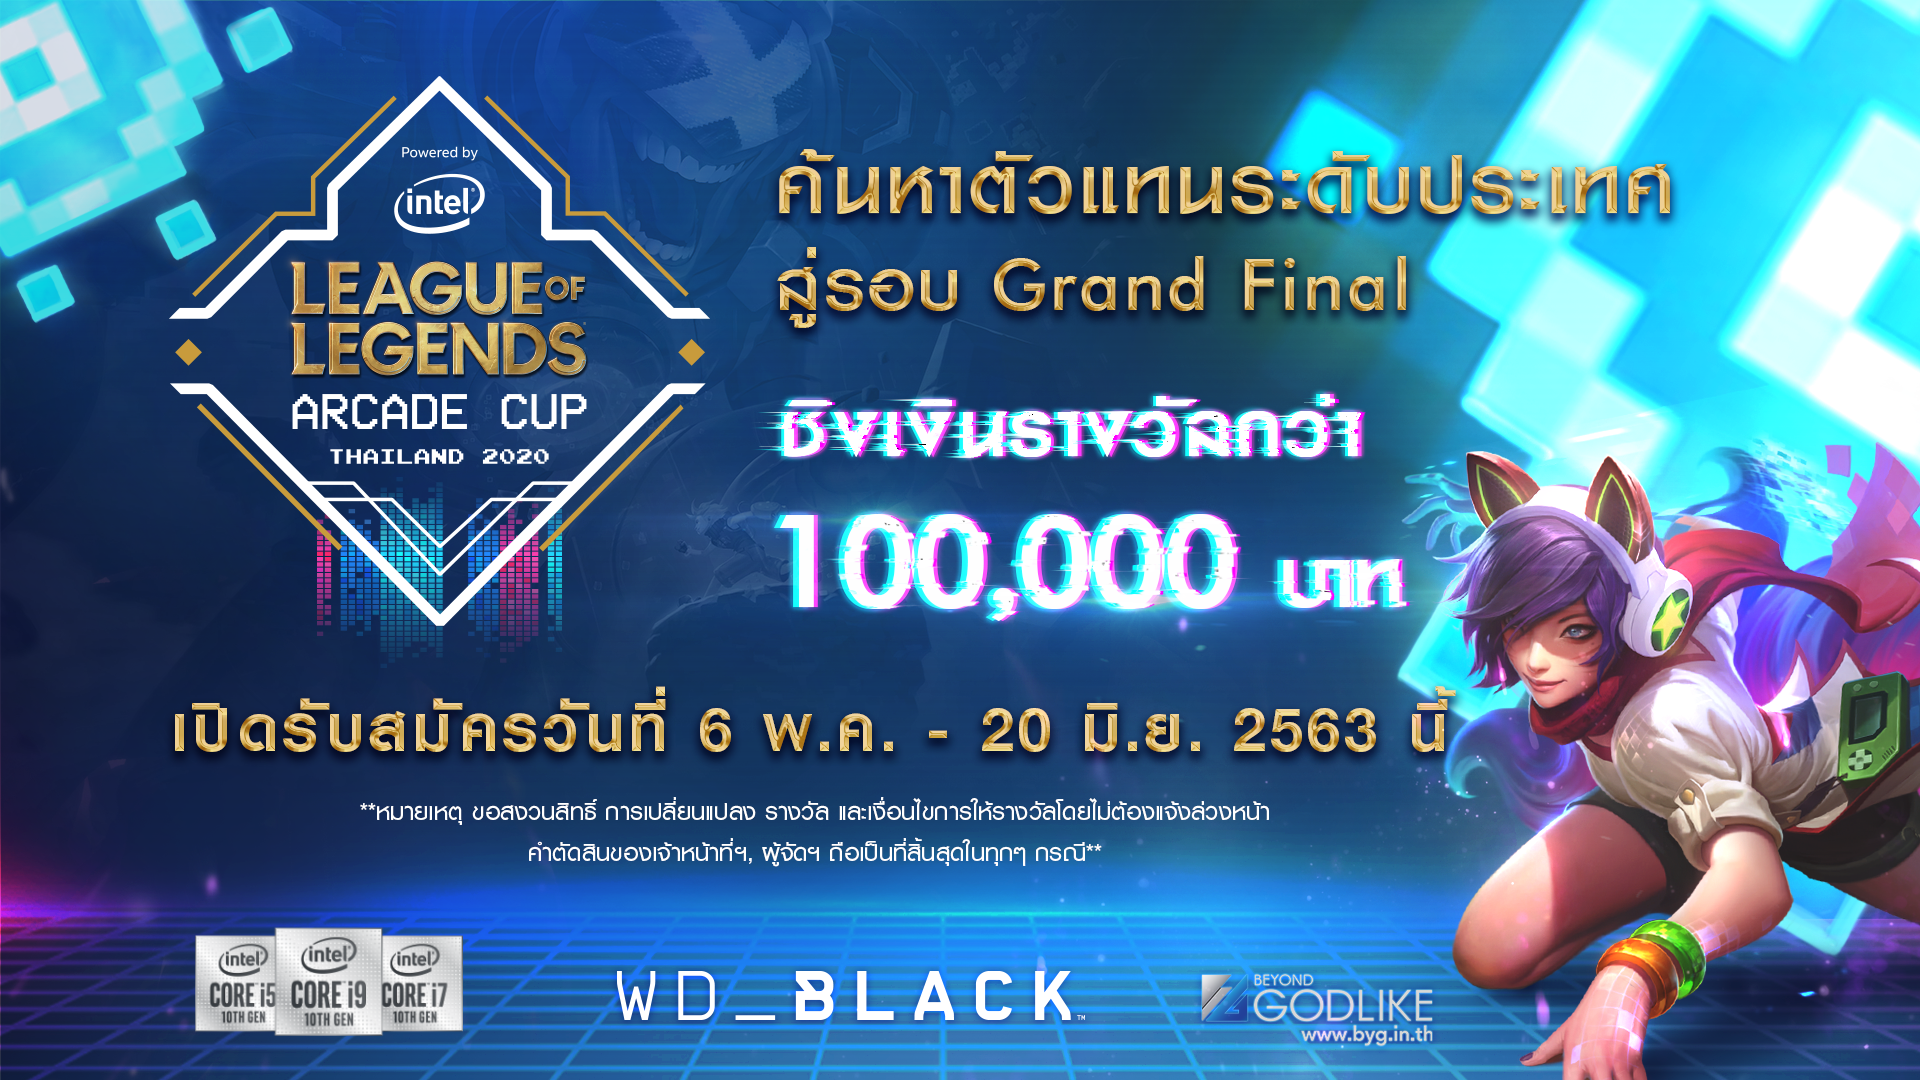 League of Legends : Arcade Cup Thailand 2020